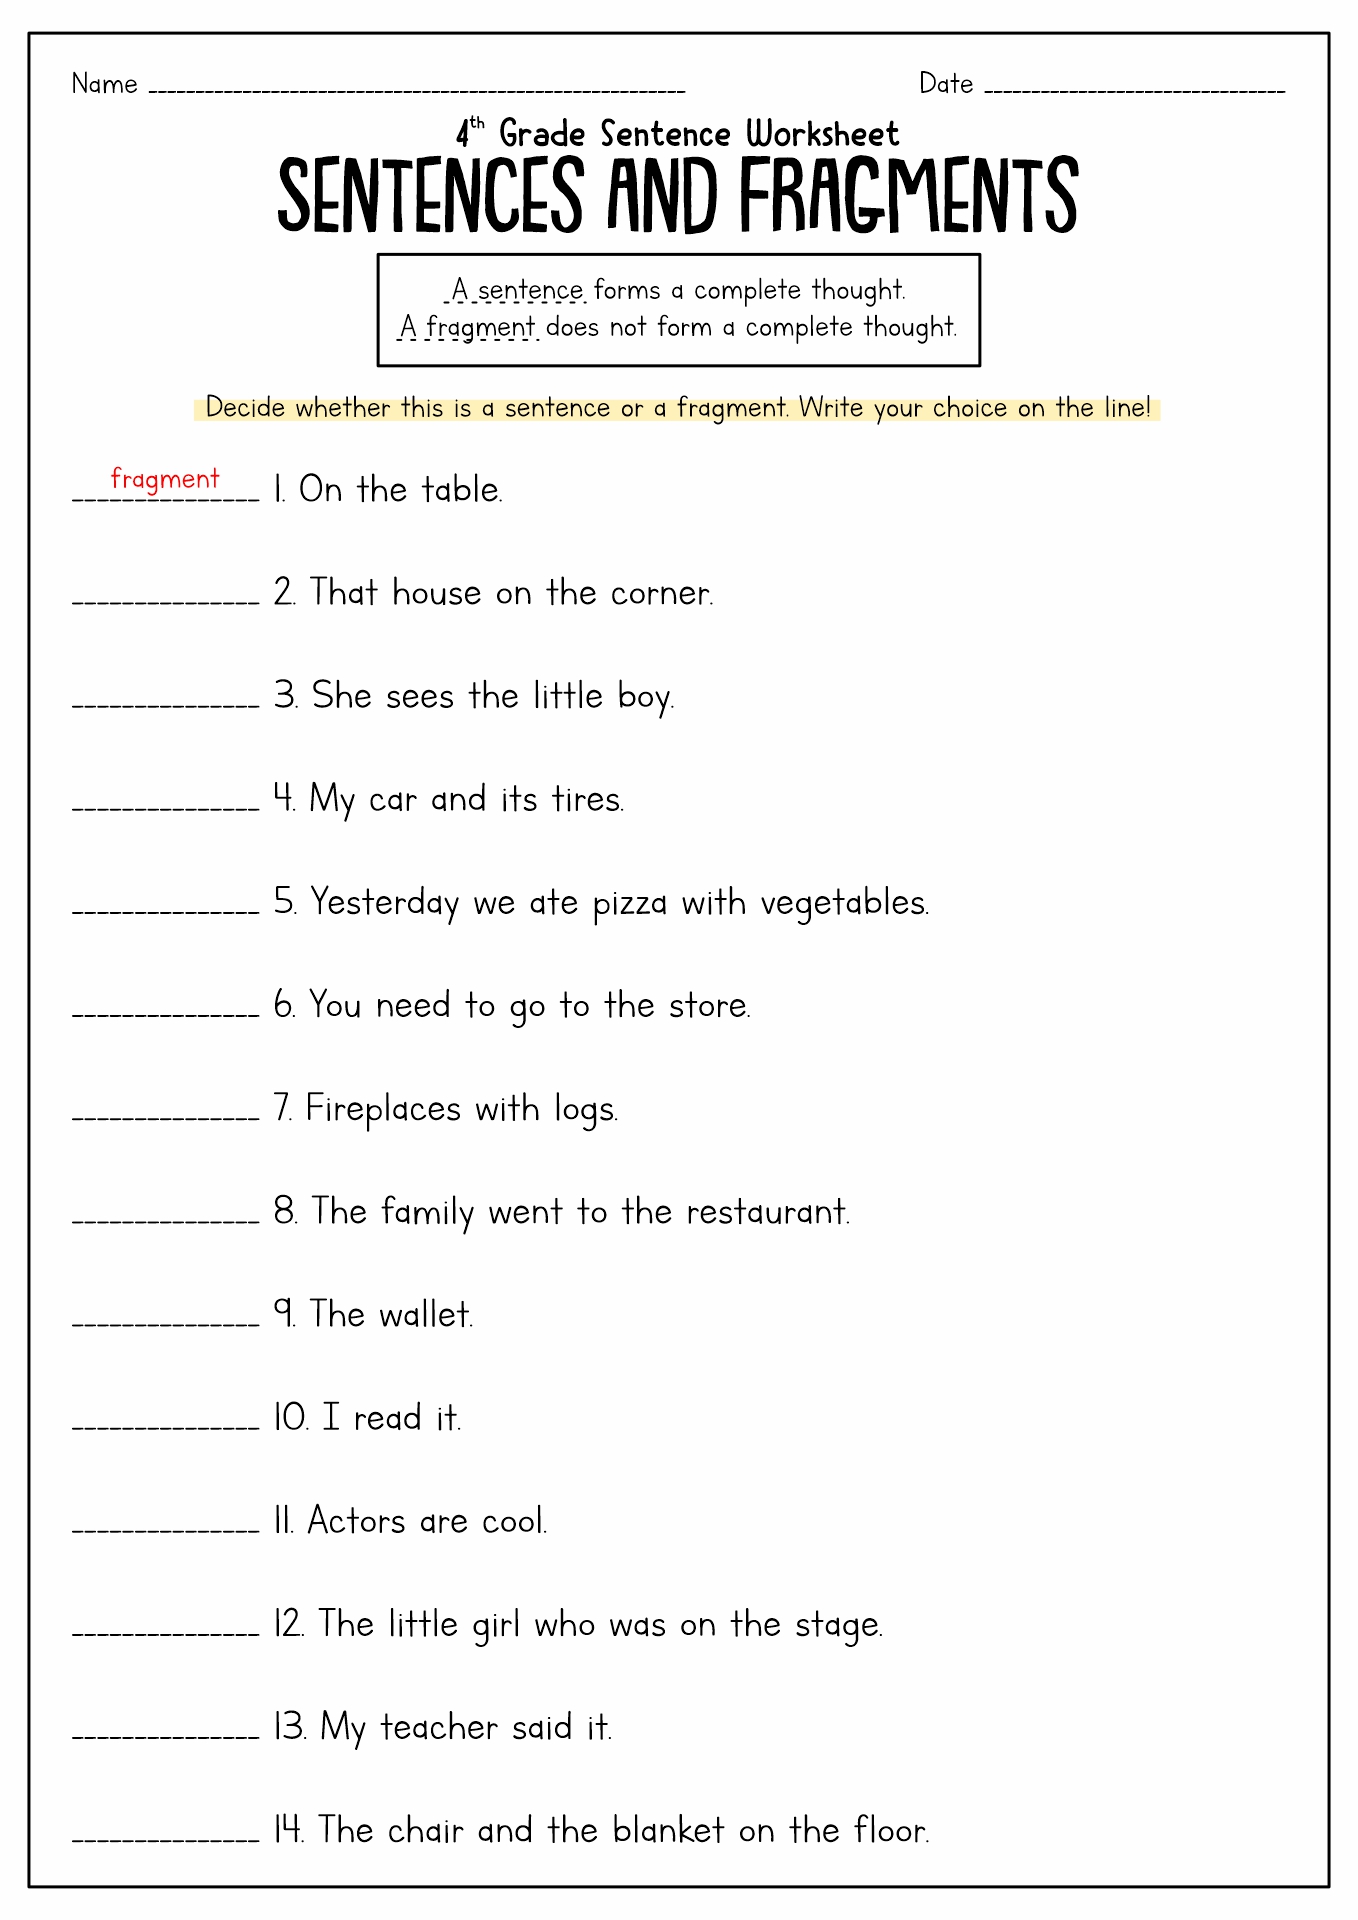 Worksheets For Seventh Grade English Fragments Vs Sentences